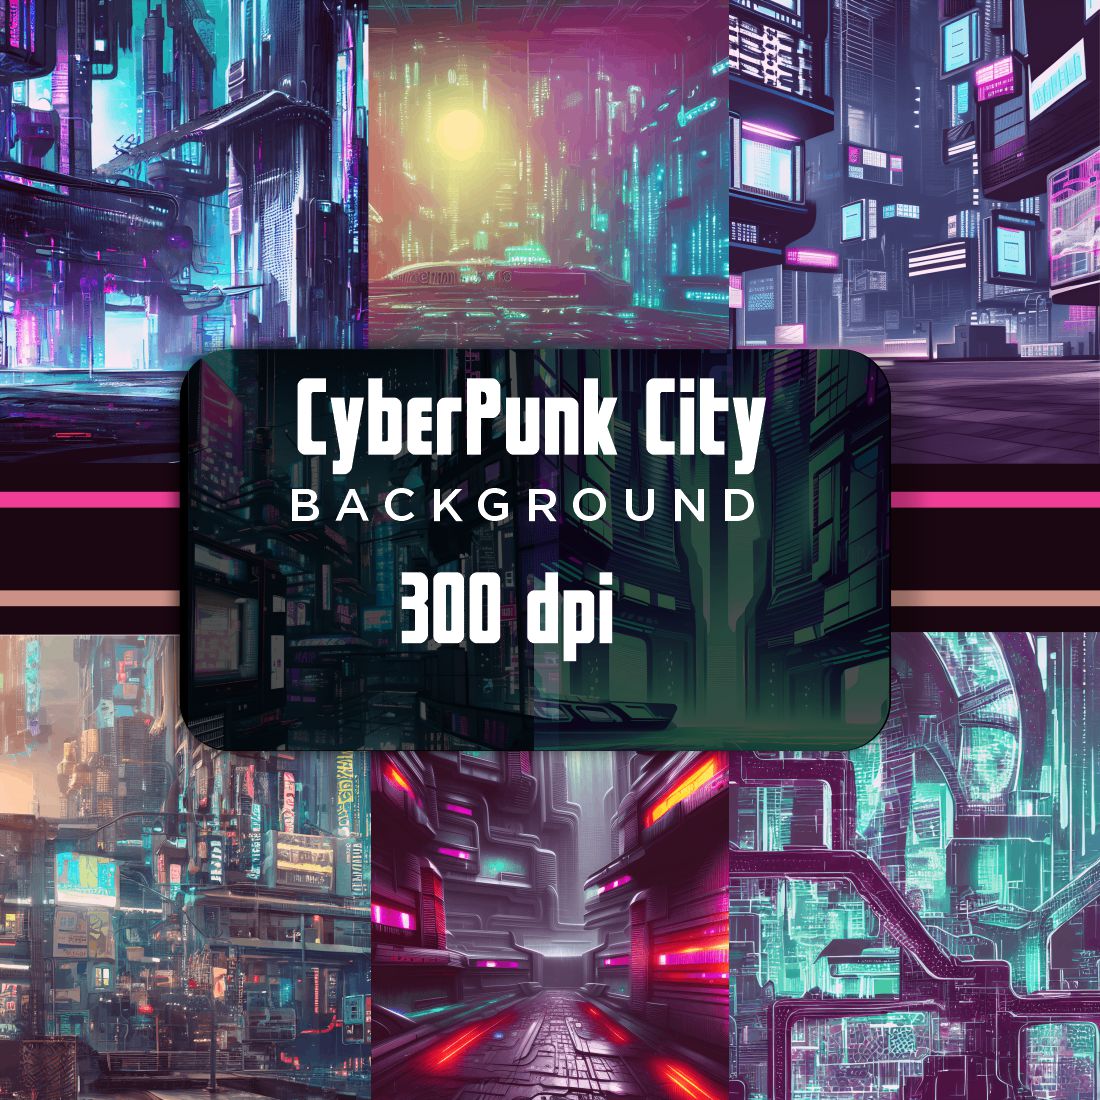 Futuristic City Cyberpunk Background cover image.